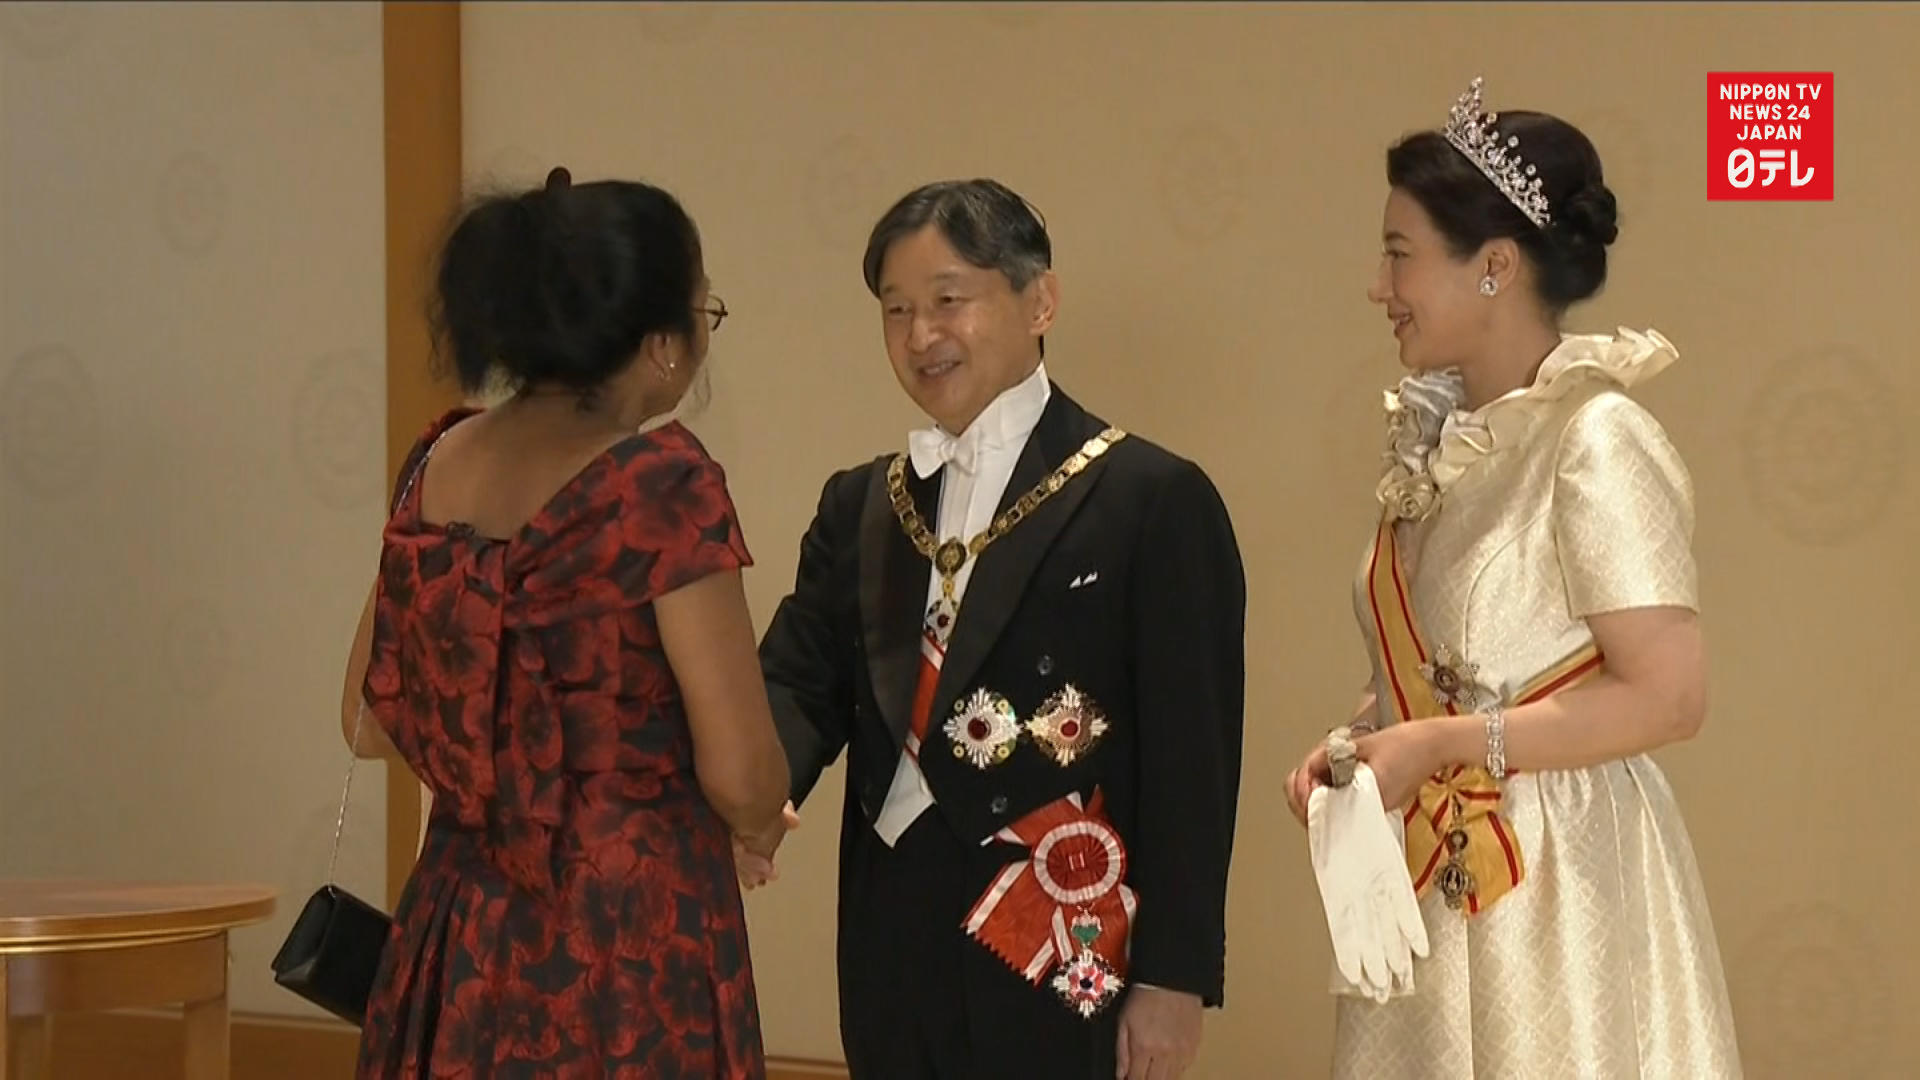 Banquet celebrates Emperor Naruhito's enthronement